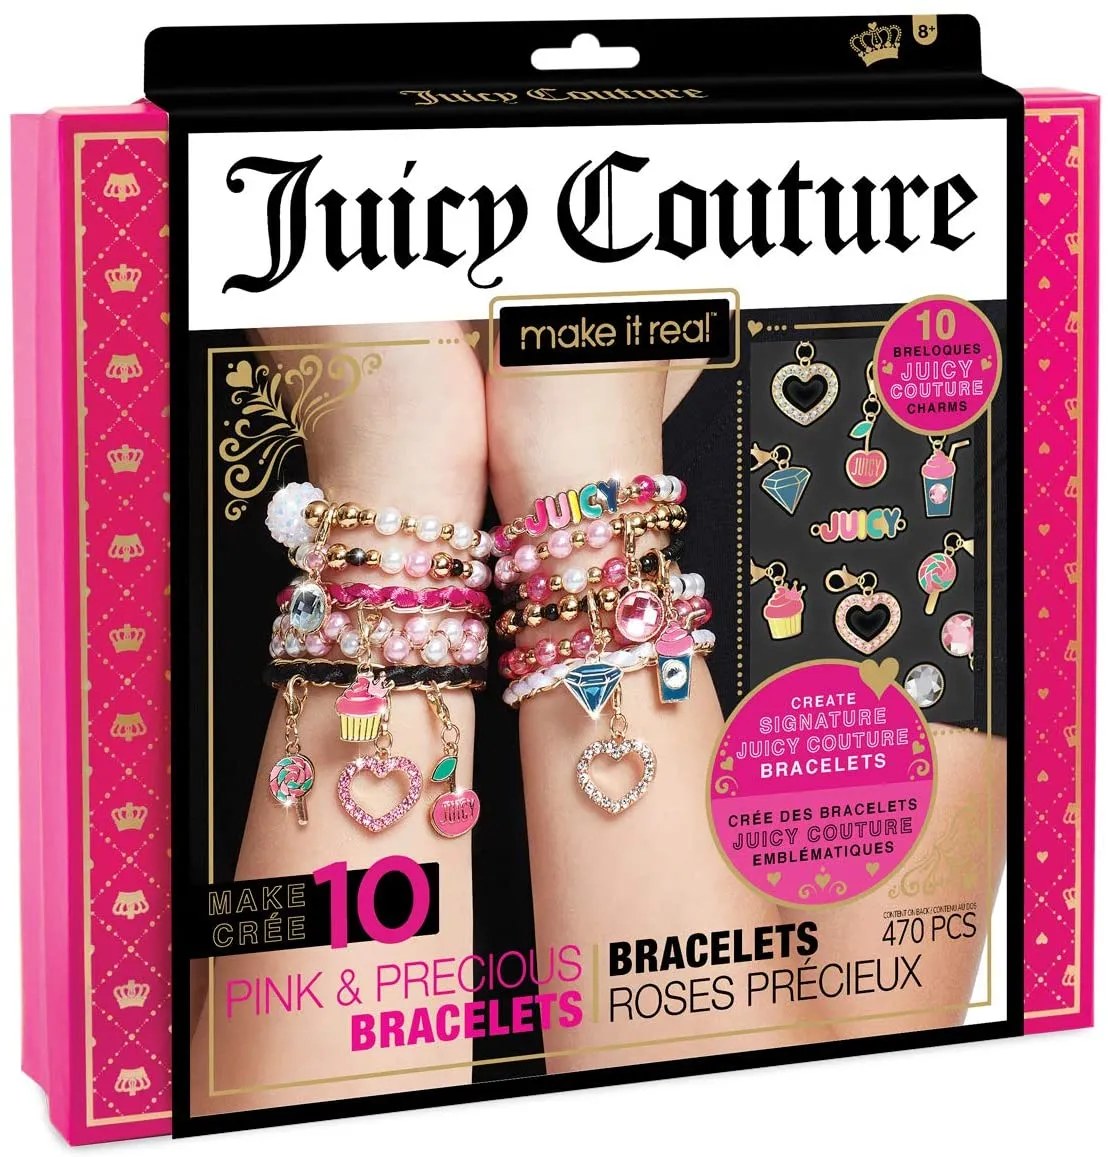 Juicy Couture pink & precious bracelet kit, Amazon